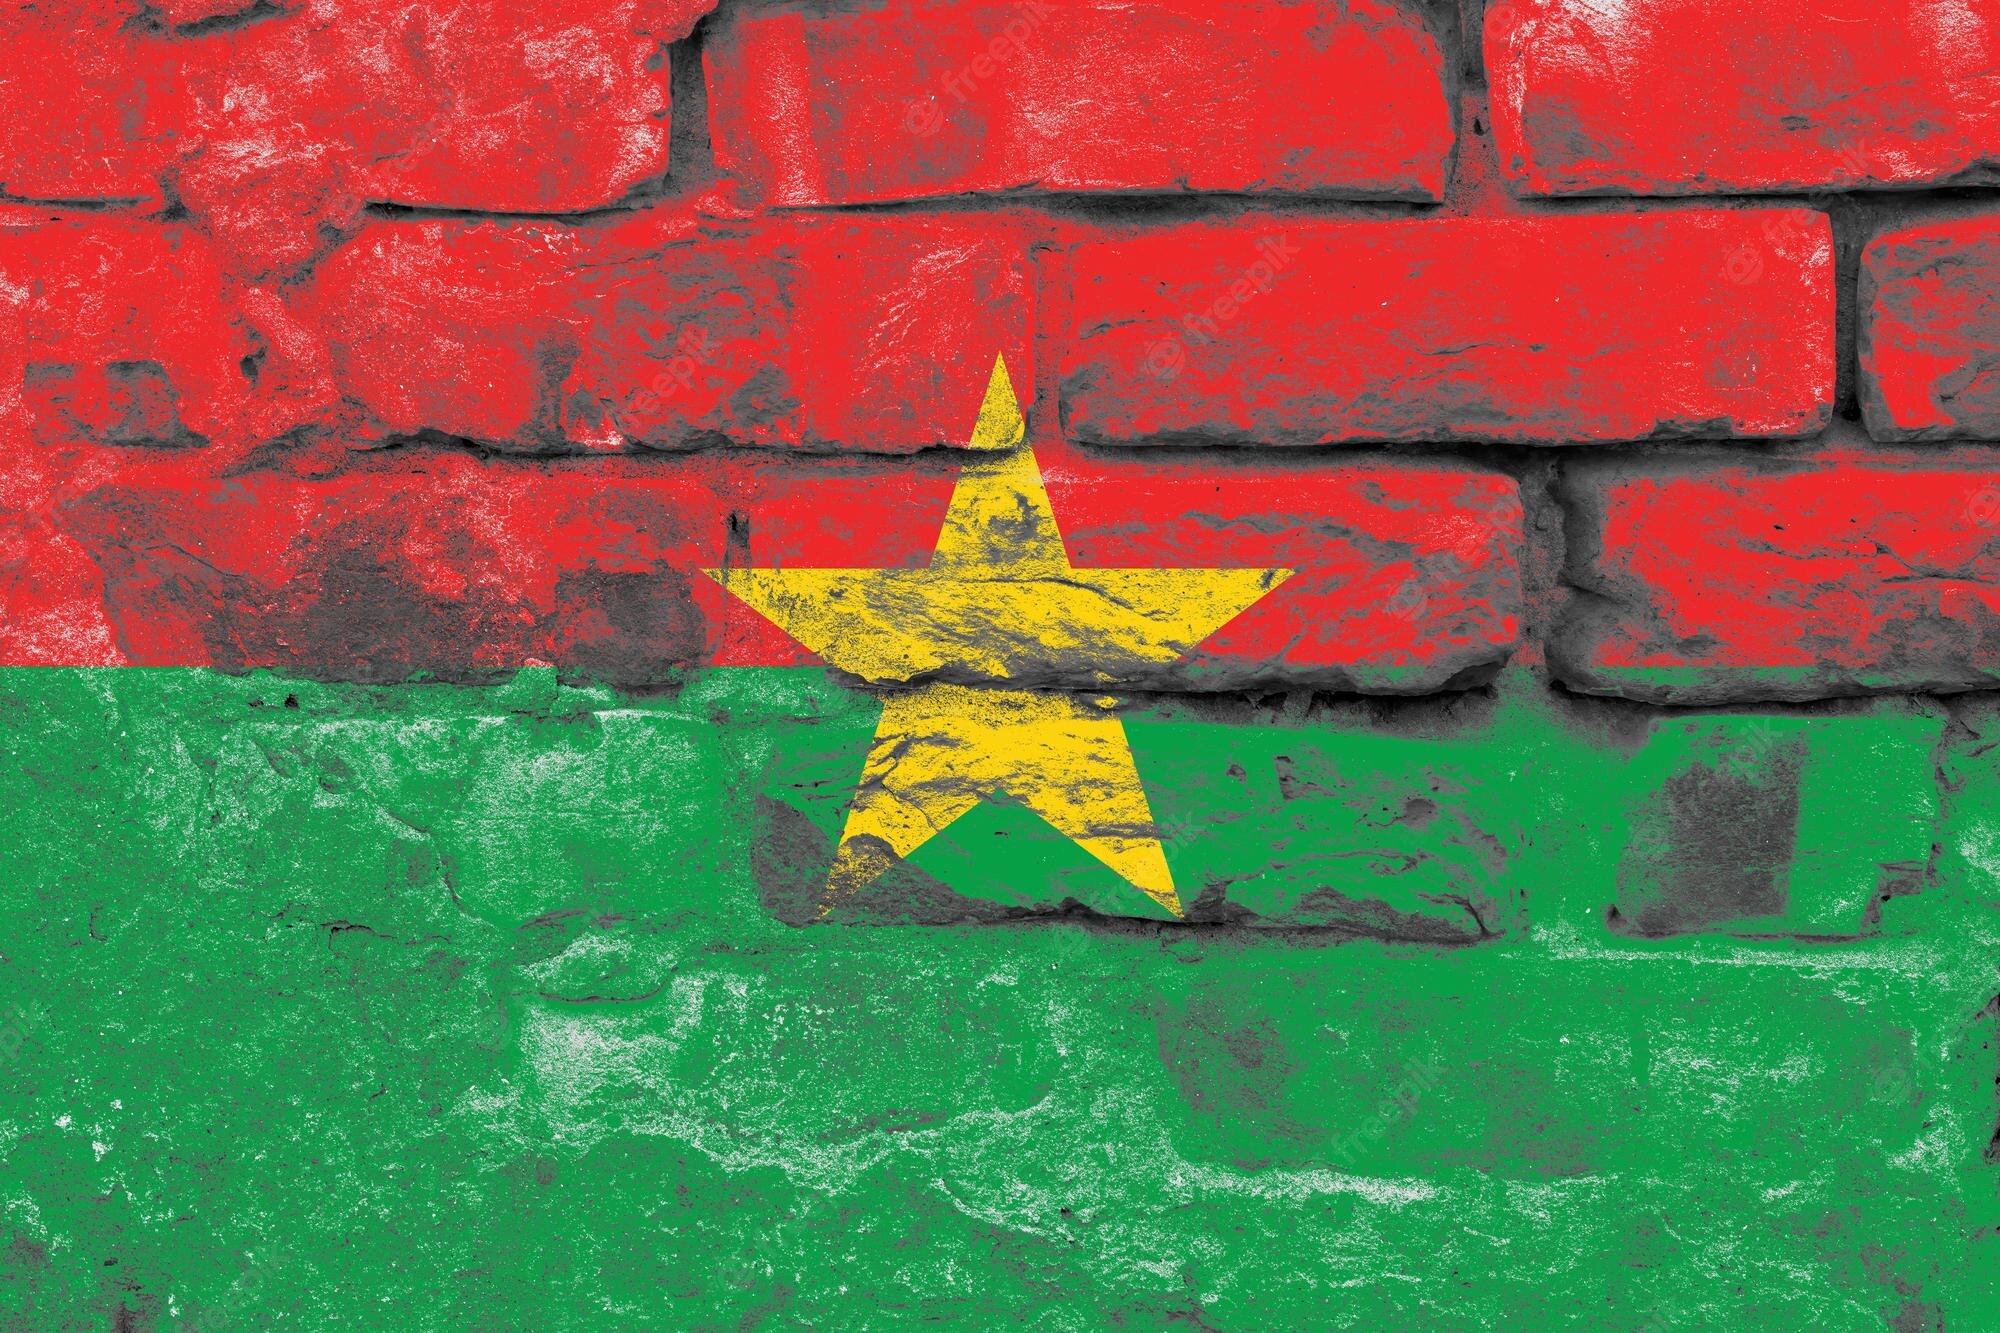 Burkina Faso Flag Wallpapers